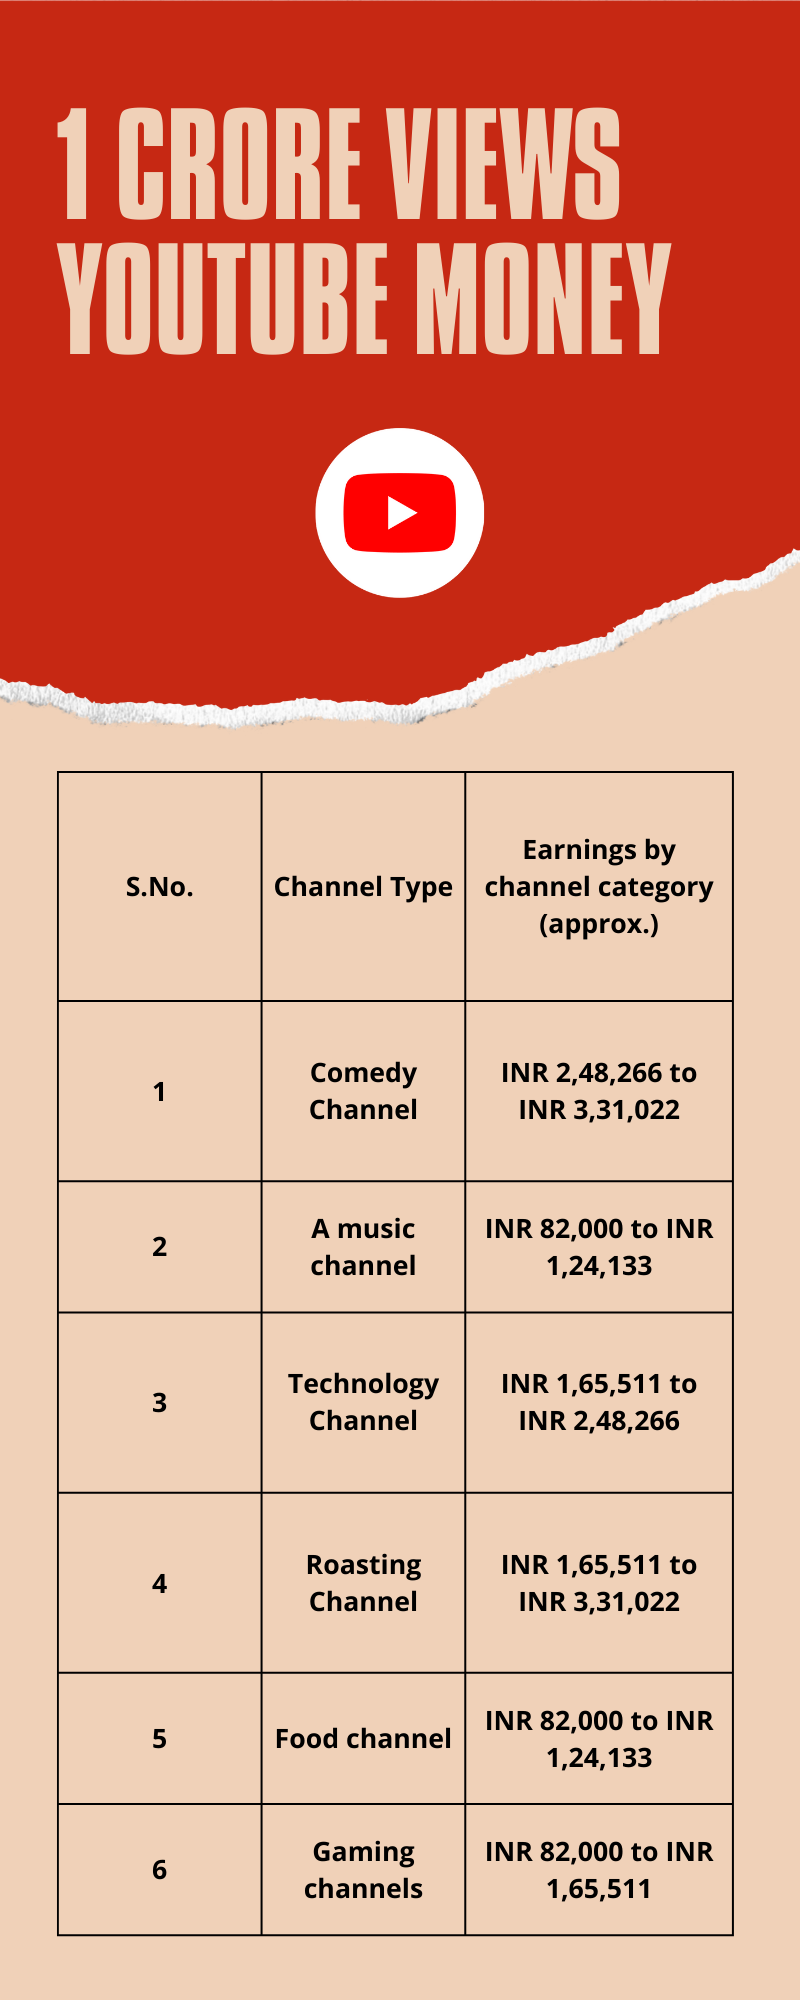 1 Crore Views YouTube Money